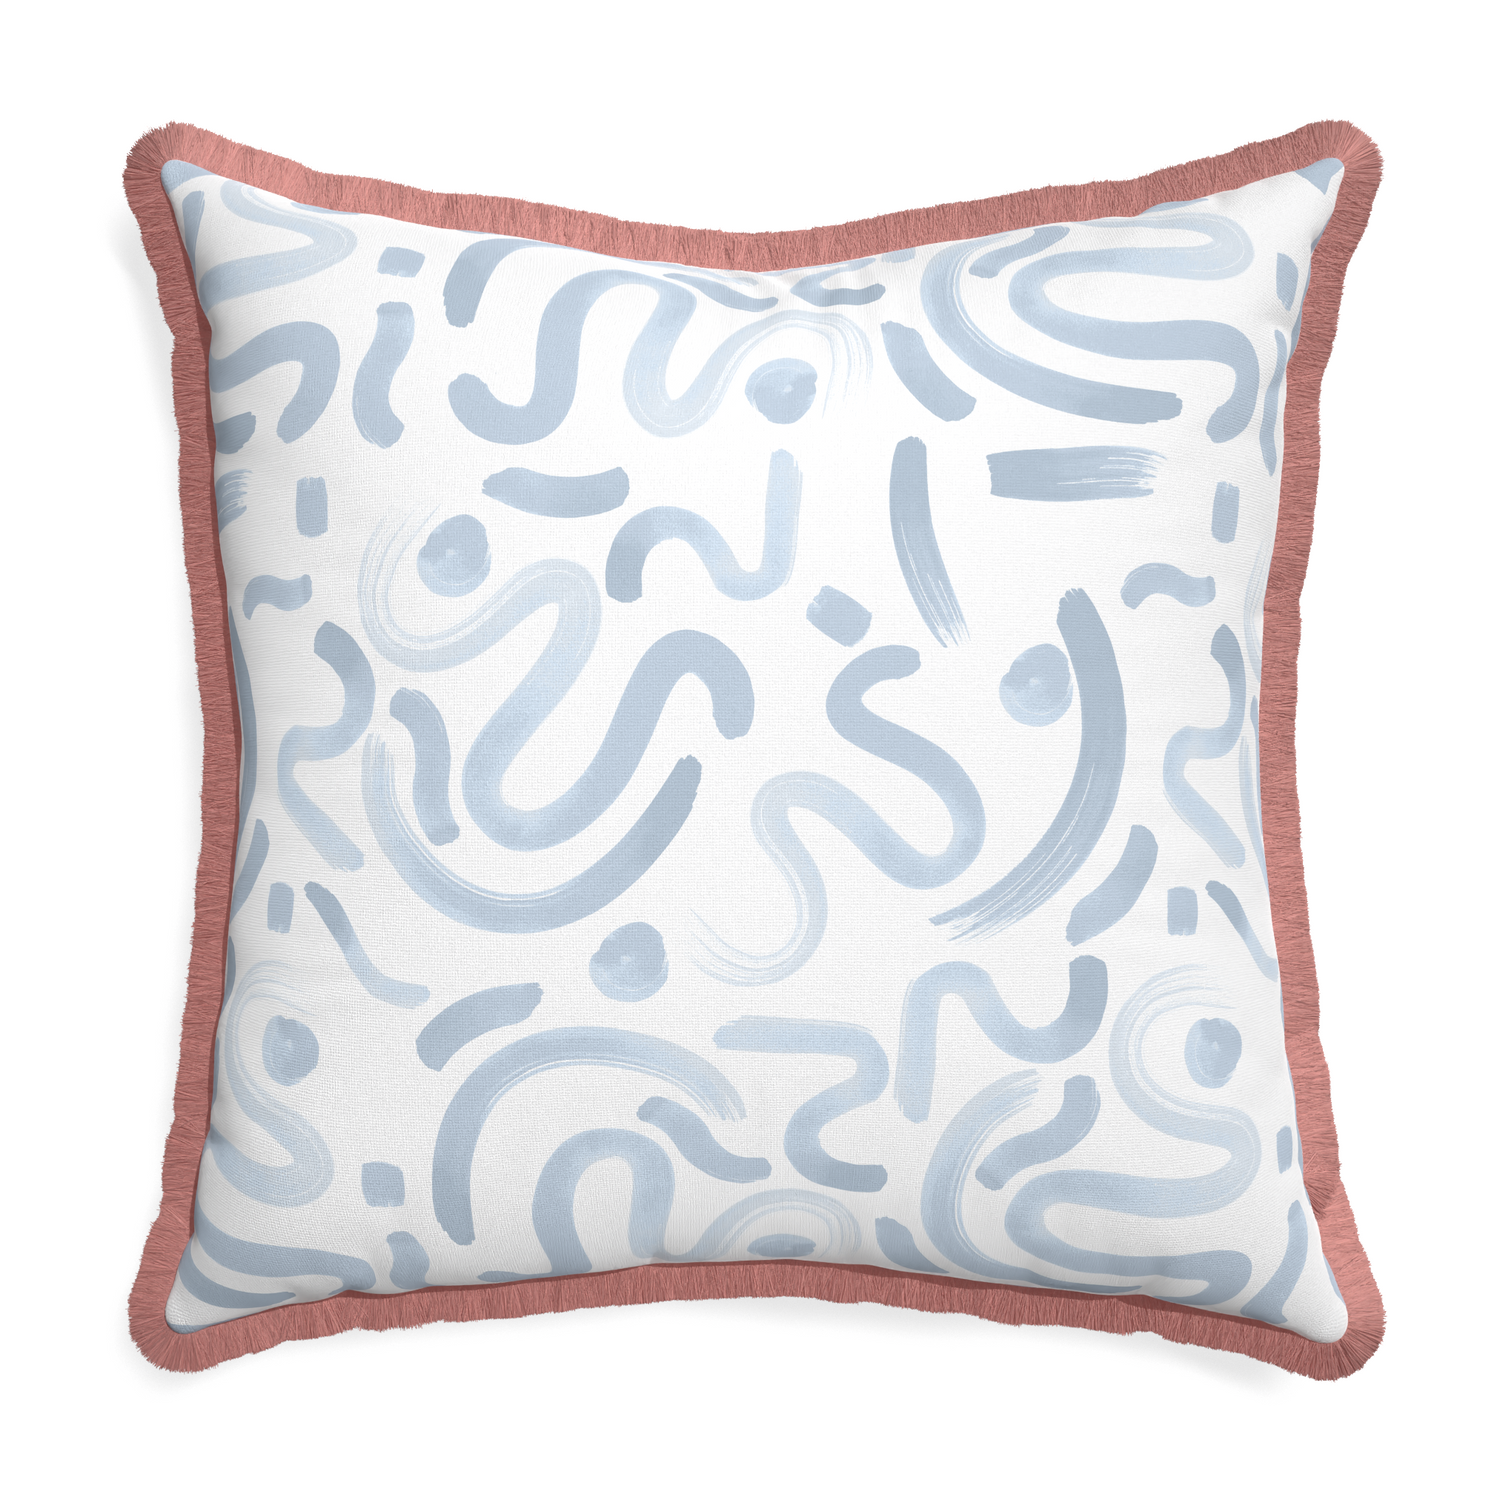 Euro-sham hockney sky custom pillow with d fringe on white background